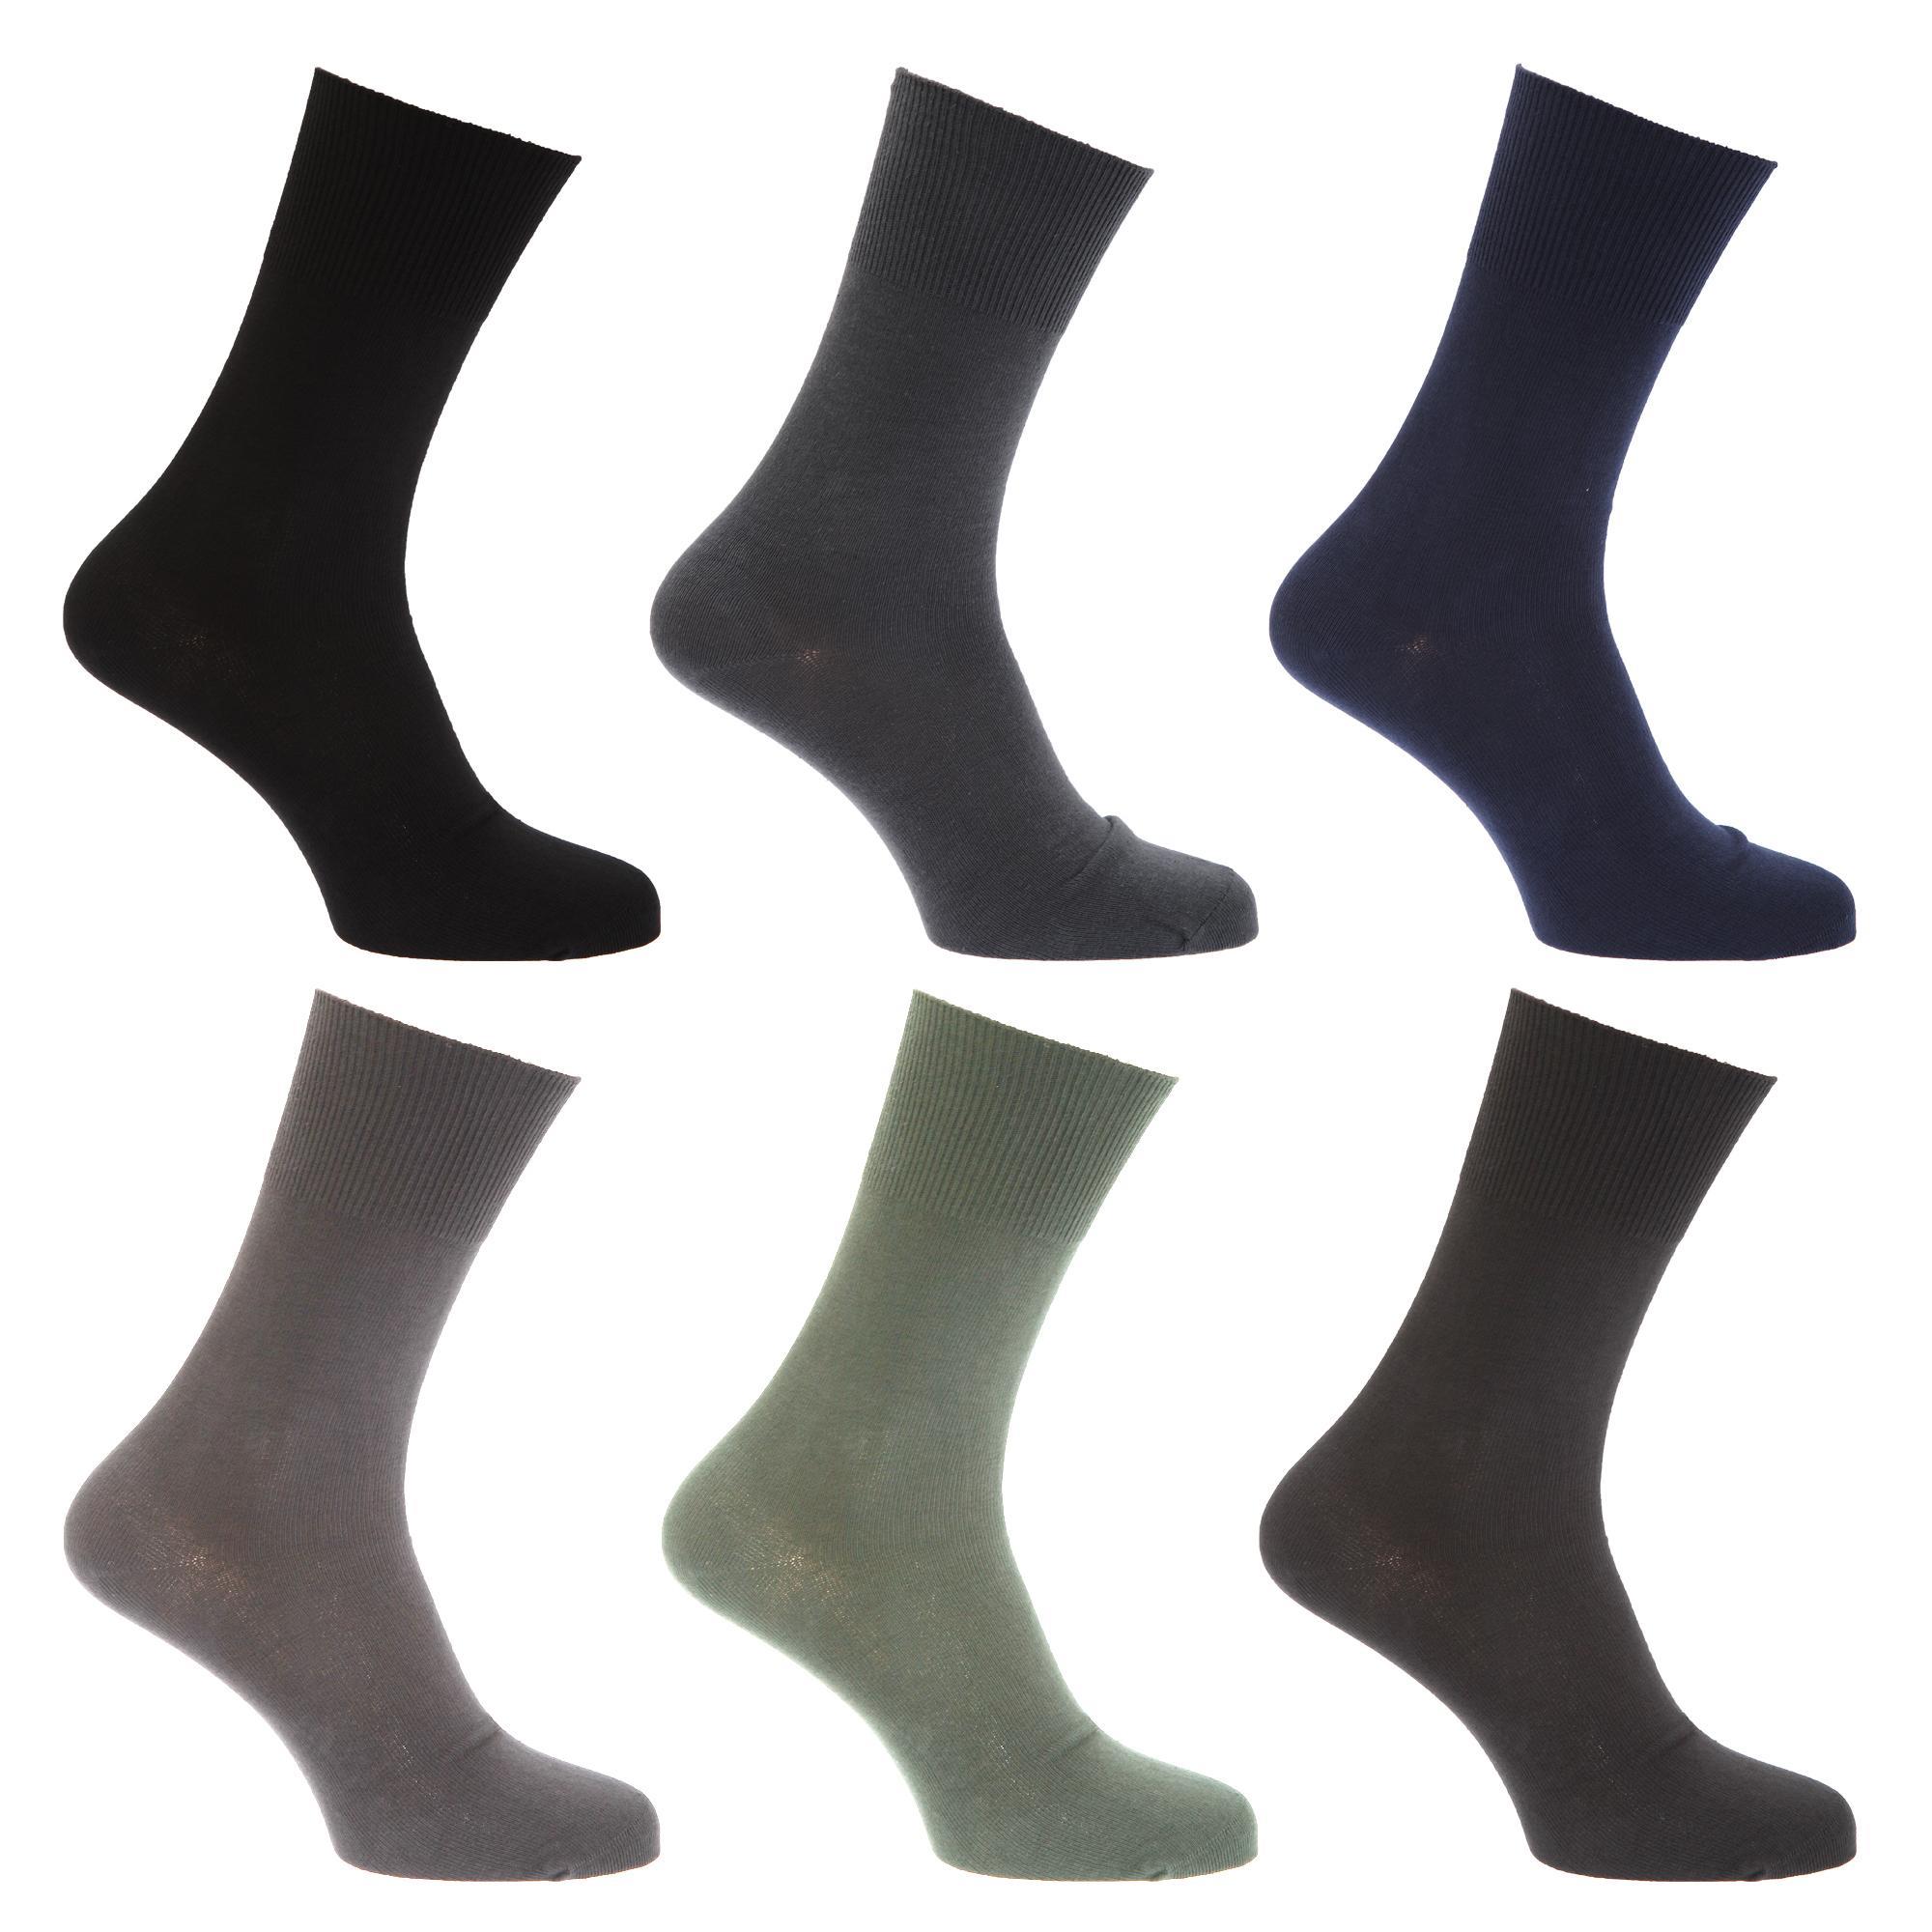 Mens Stay Up Non Elastic Diabetic Socks (Pack Of 6) (Black/Grey/Navy) (UK Shoe 6-11, EUR 39-45)